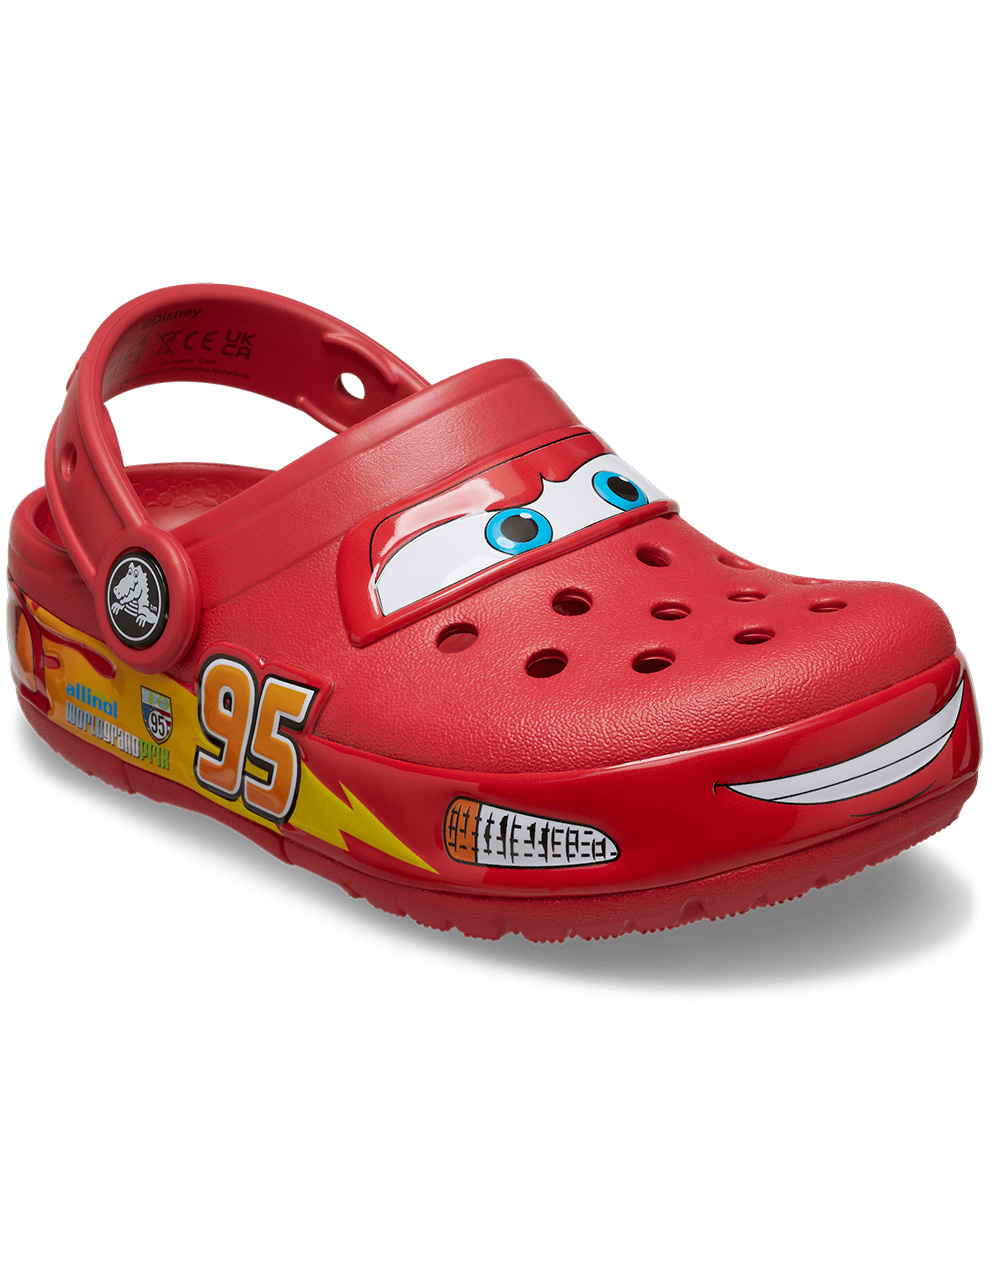 CROCS x Disney Pixar Cars Lightning McQueen Little Kids Clogs - RED COMBO